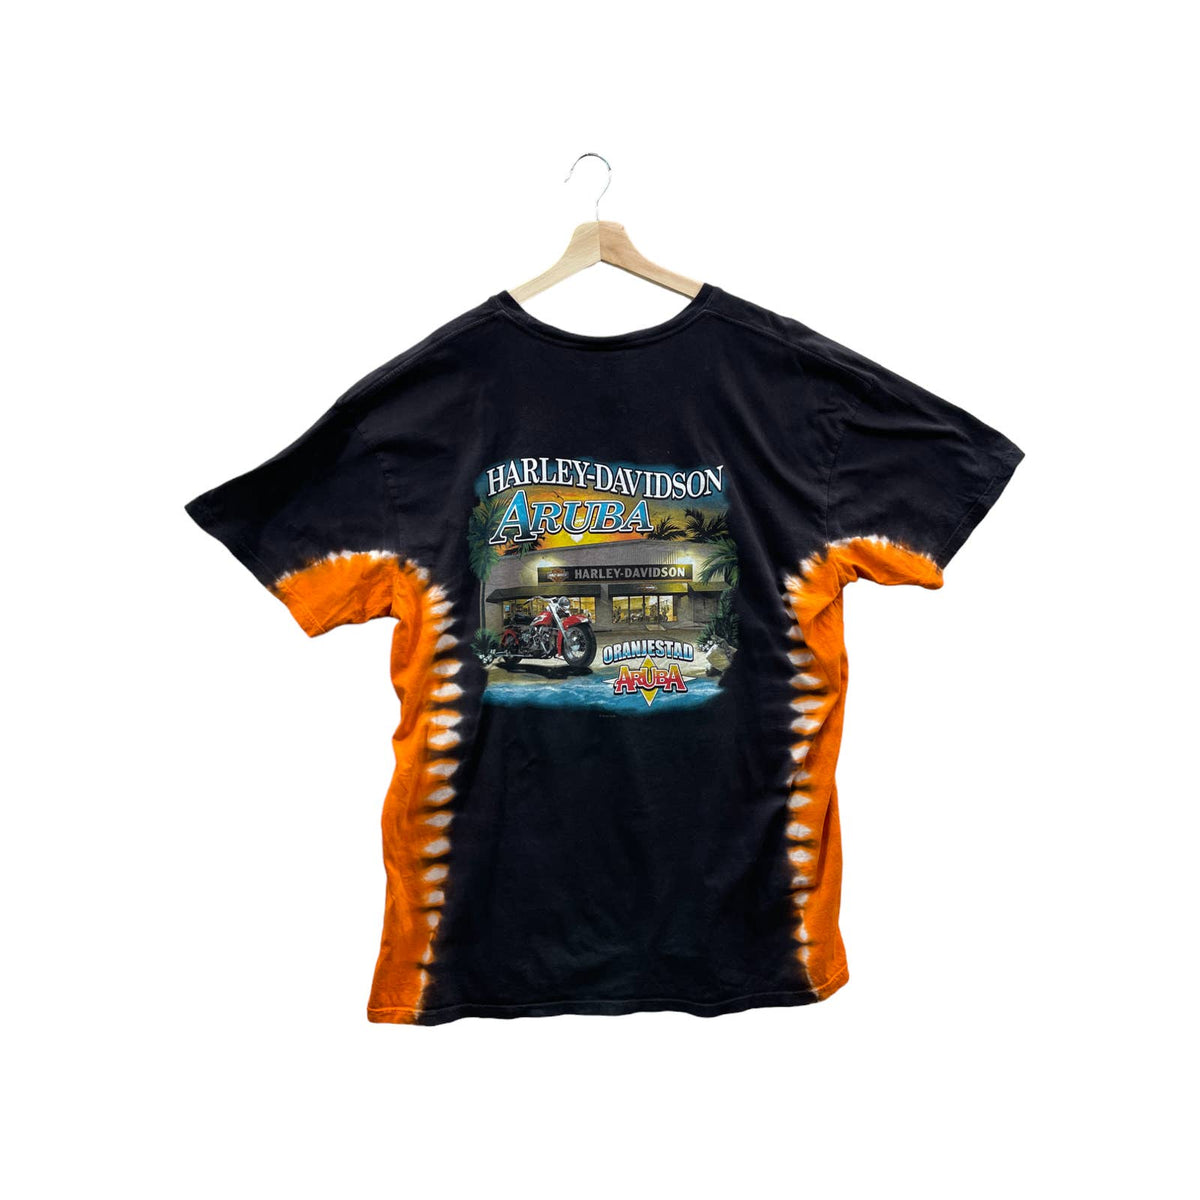 Vintage 2000's Harley-Davidson Tie Dye Eagle Graphic T-Shirt